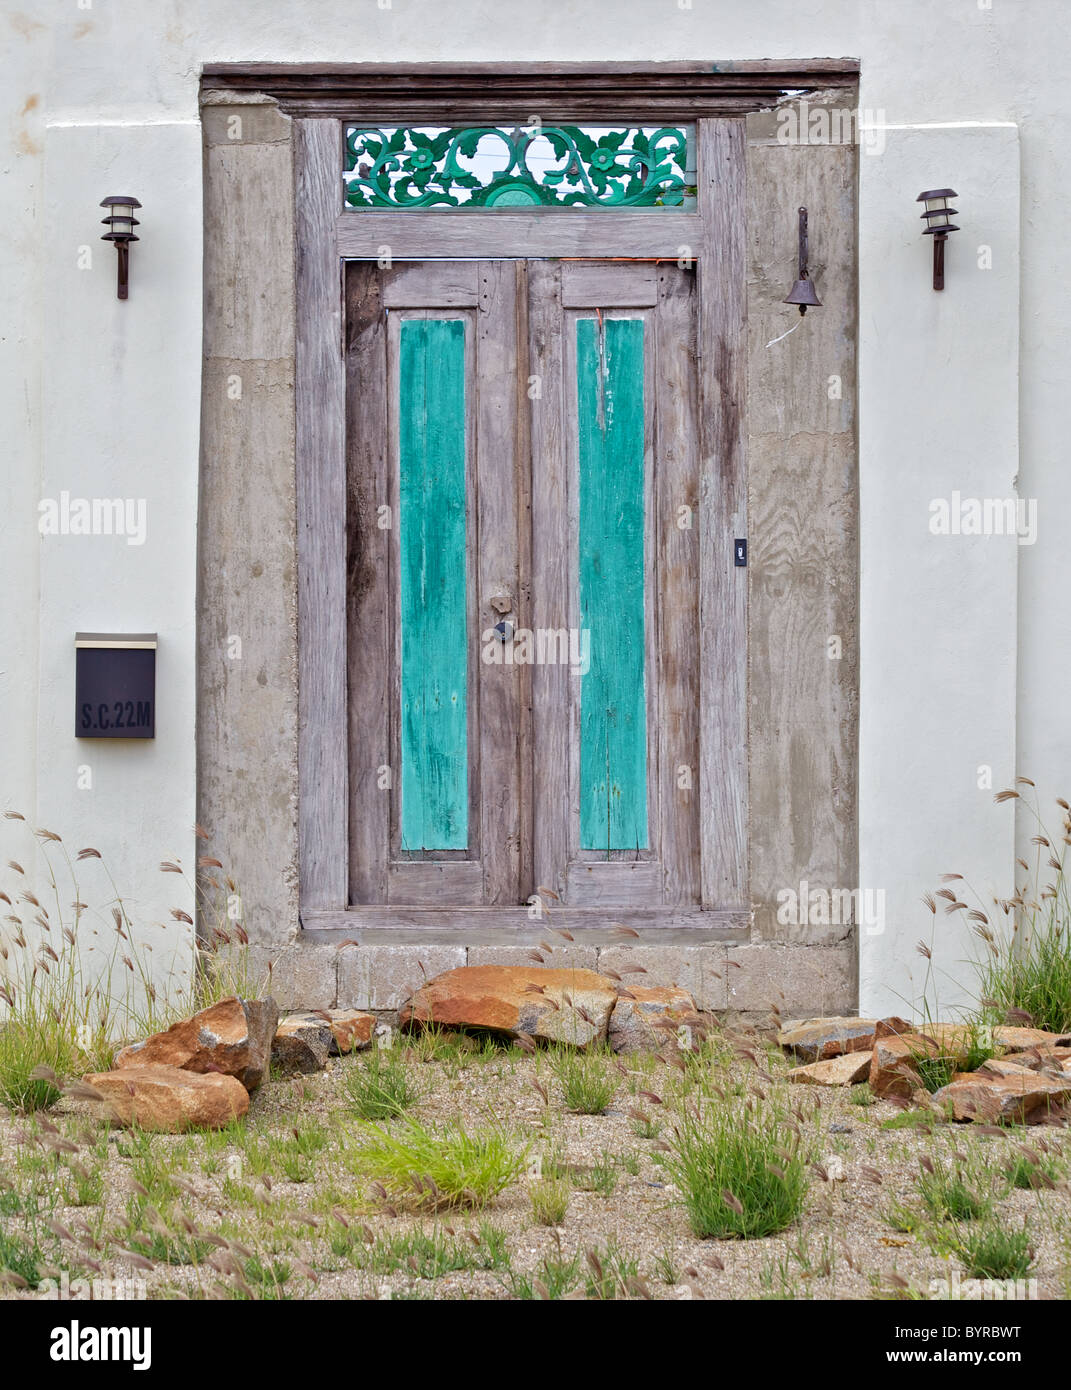 Weathered Wood Door with Green Panels in the Caribbean Island of Aruba Stock Photo